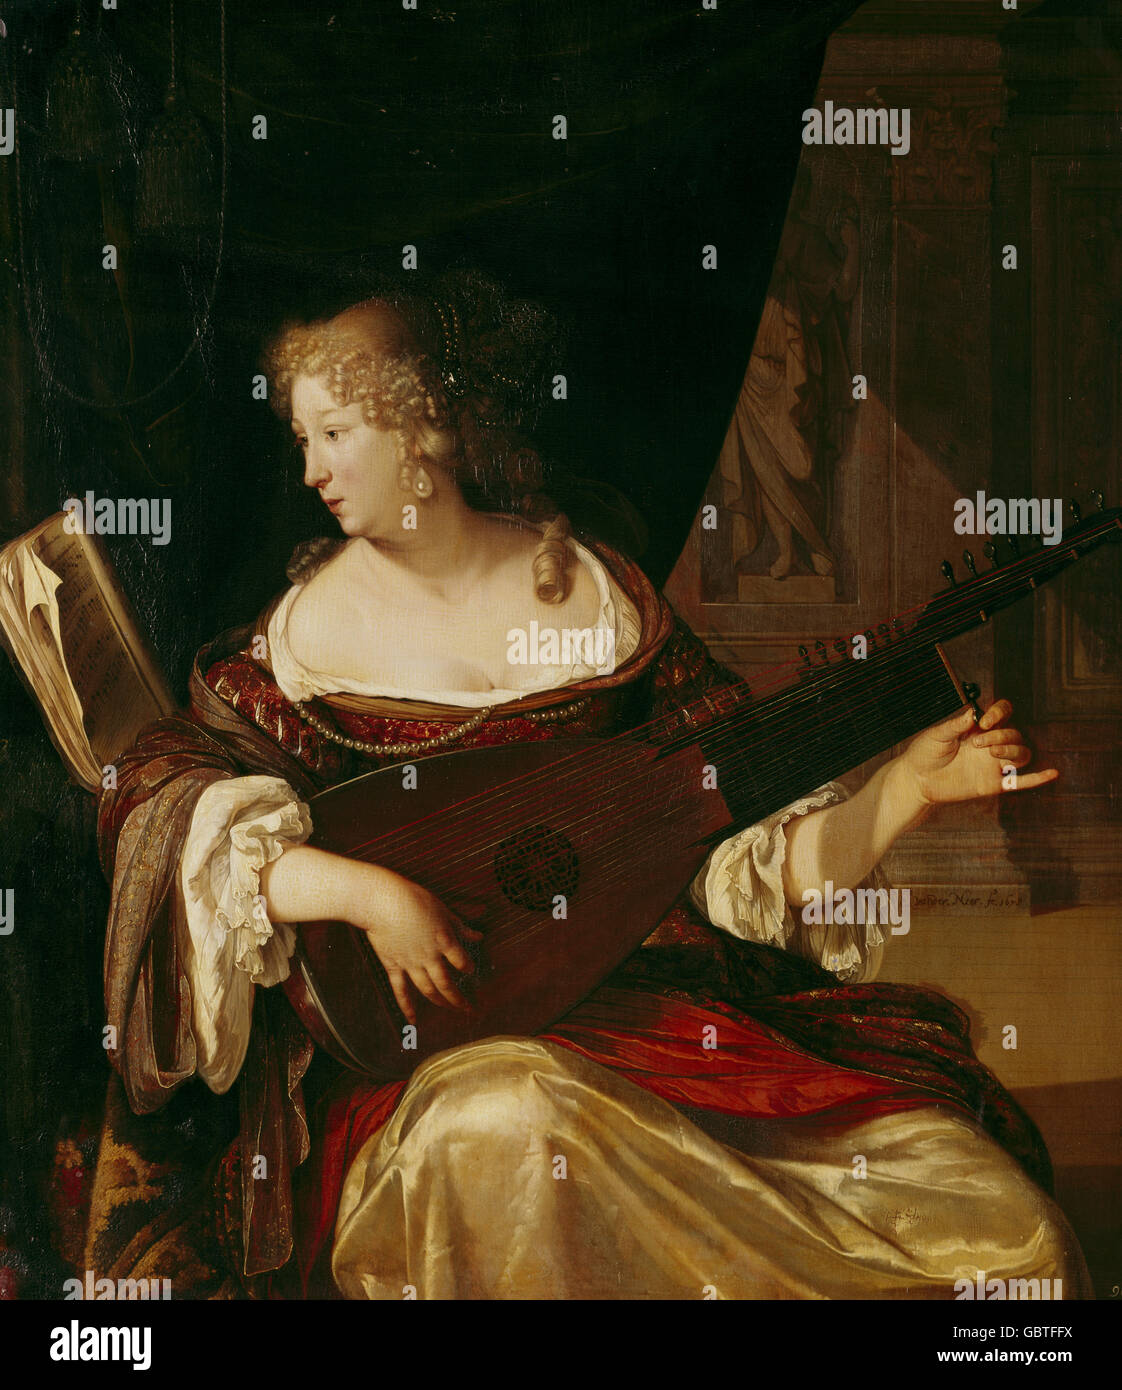 Kunst, Neer, Eglon Hendrick van der (1634 - 1703), pittura, "liuto tuning donna", olio su pannello, 1678, Alte Pinakothek di Monaco di Baviera Foto Stock